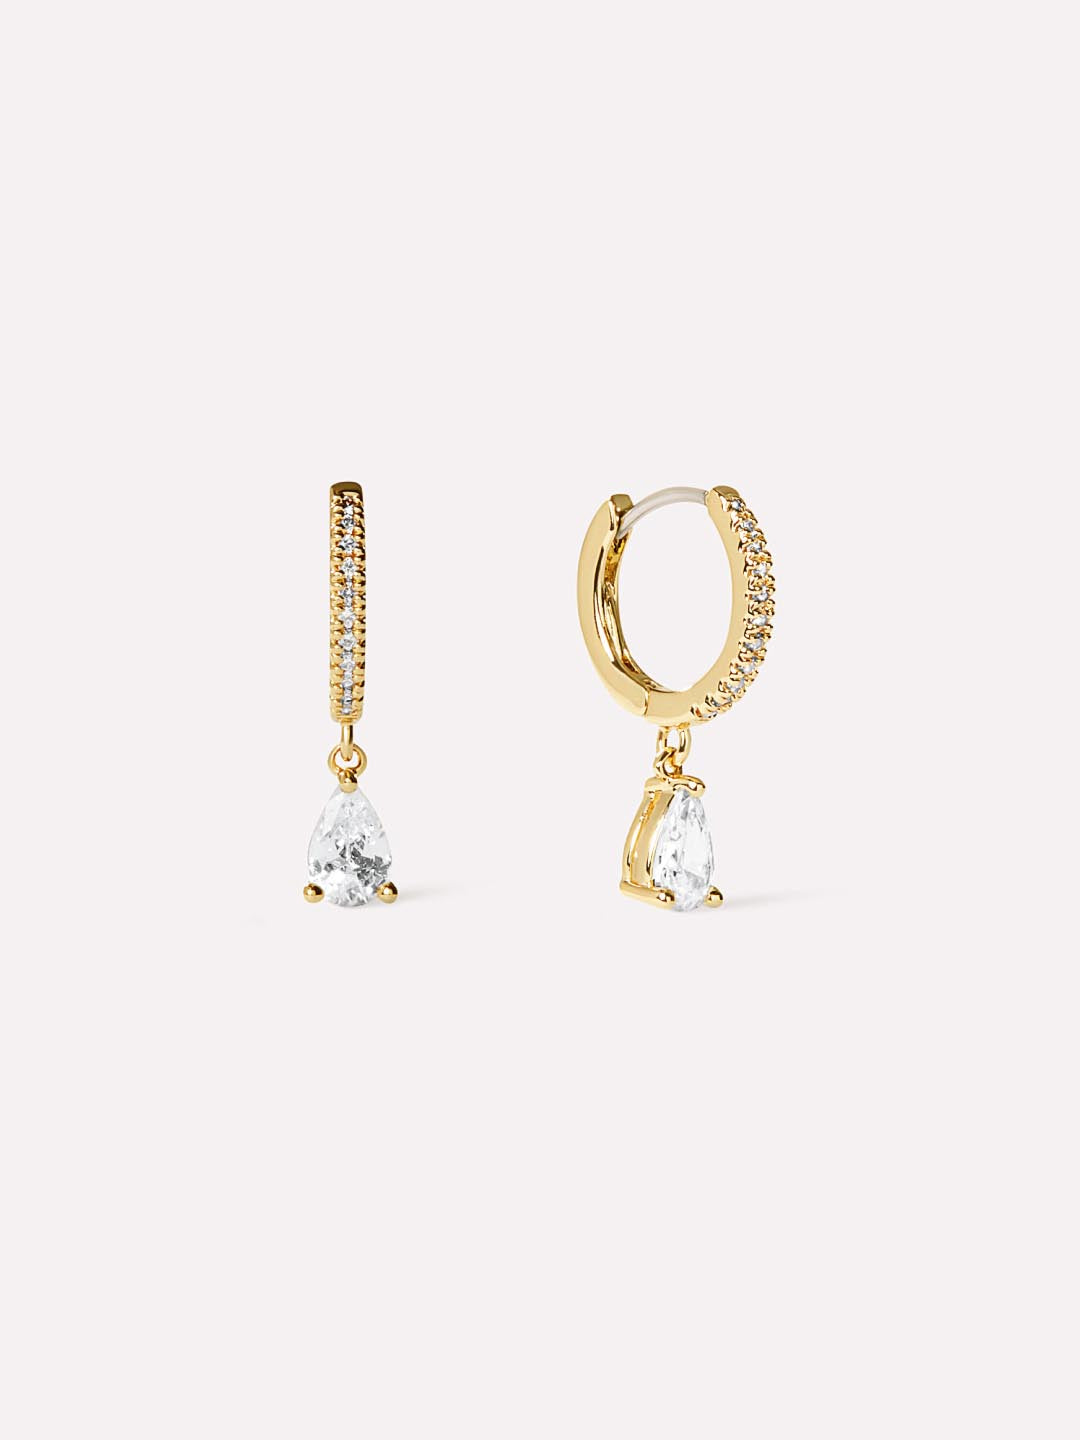 Double Hoop Earrings - Harley | Ana Luisa Jewelry